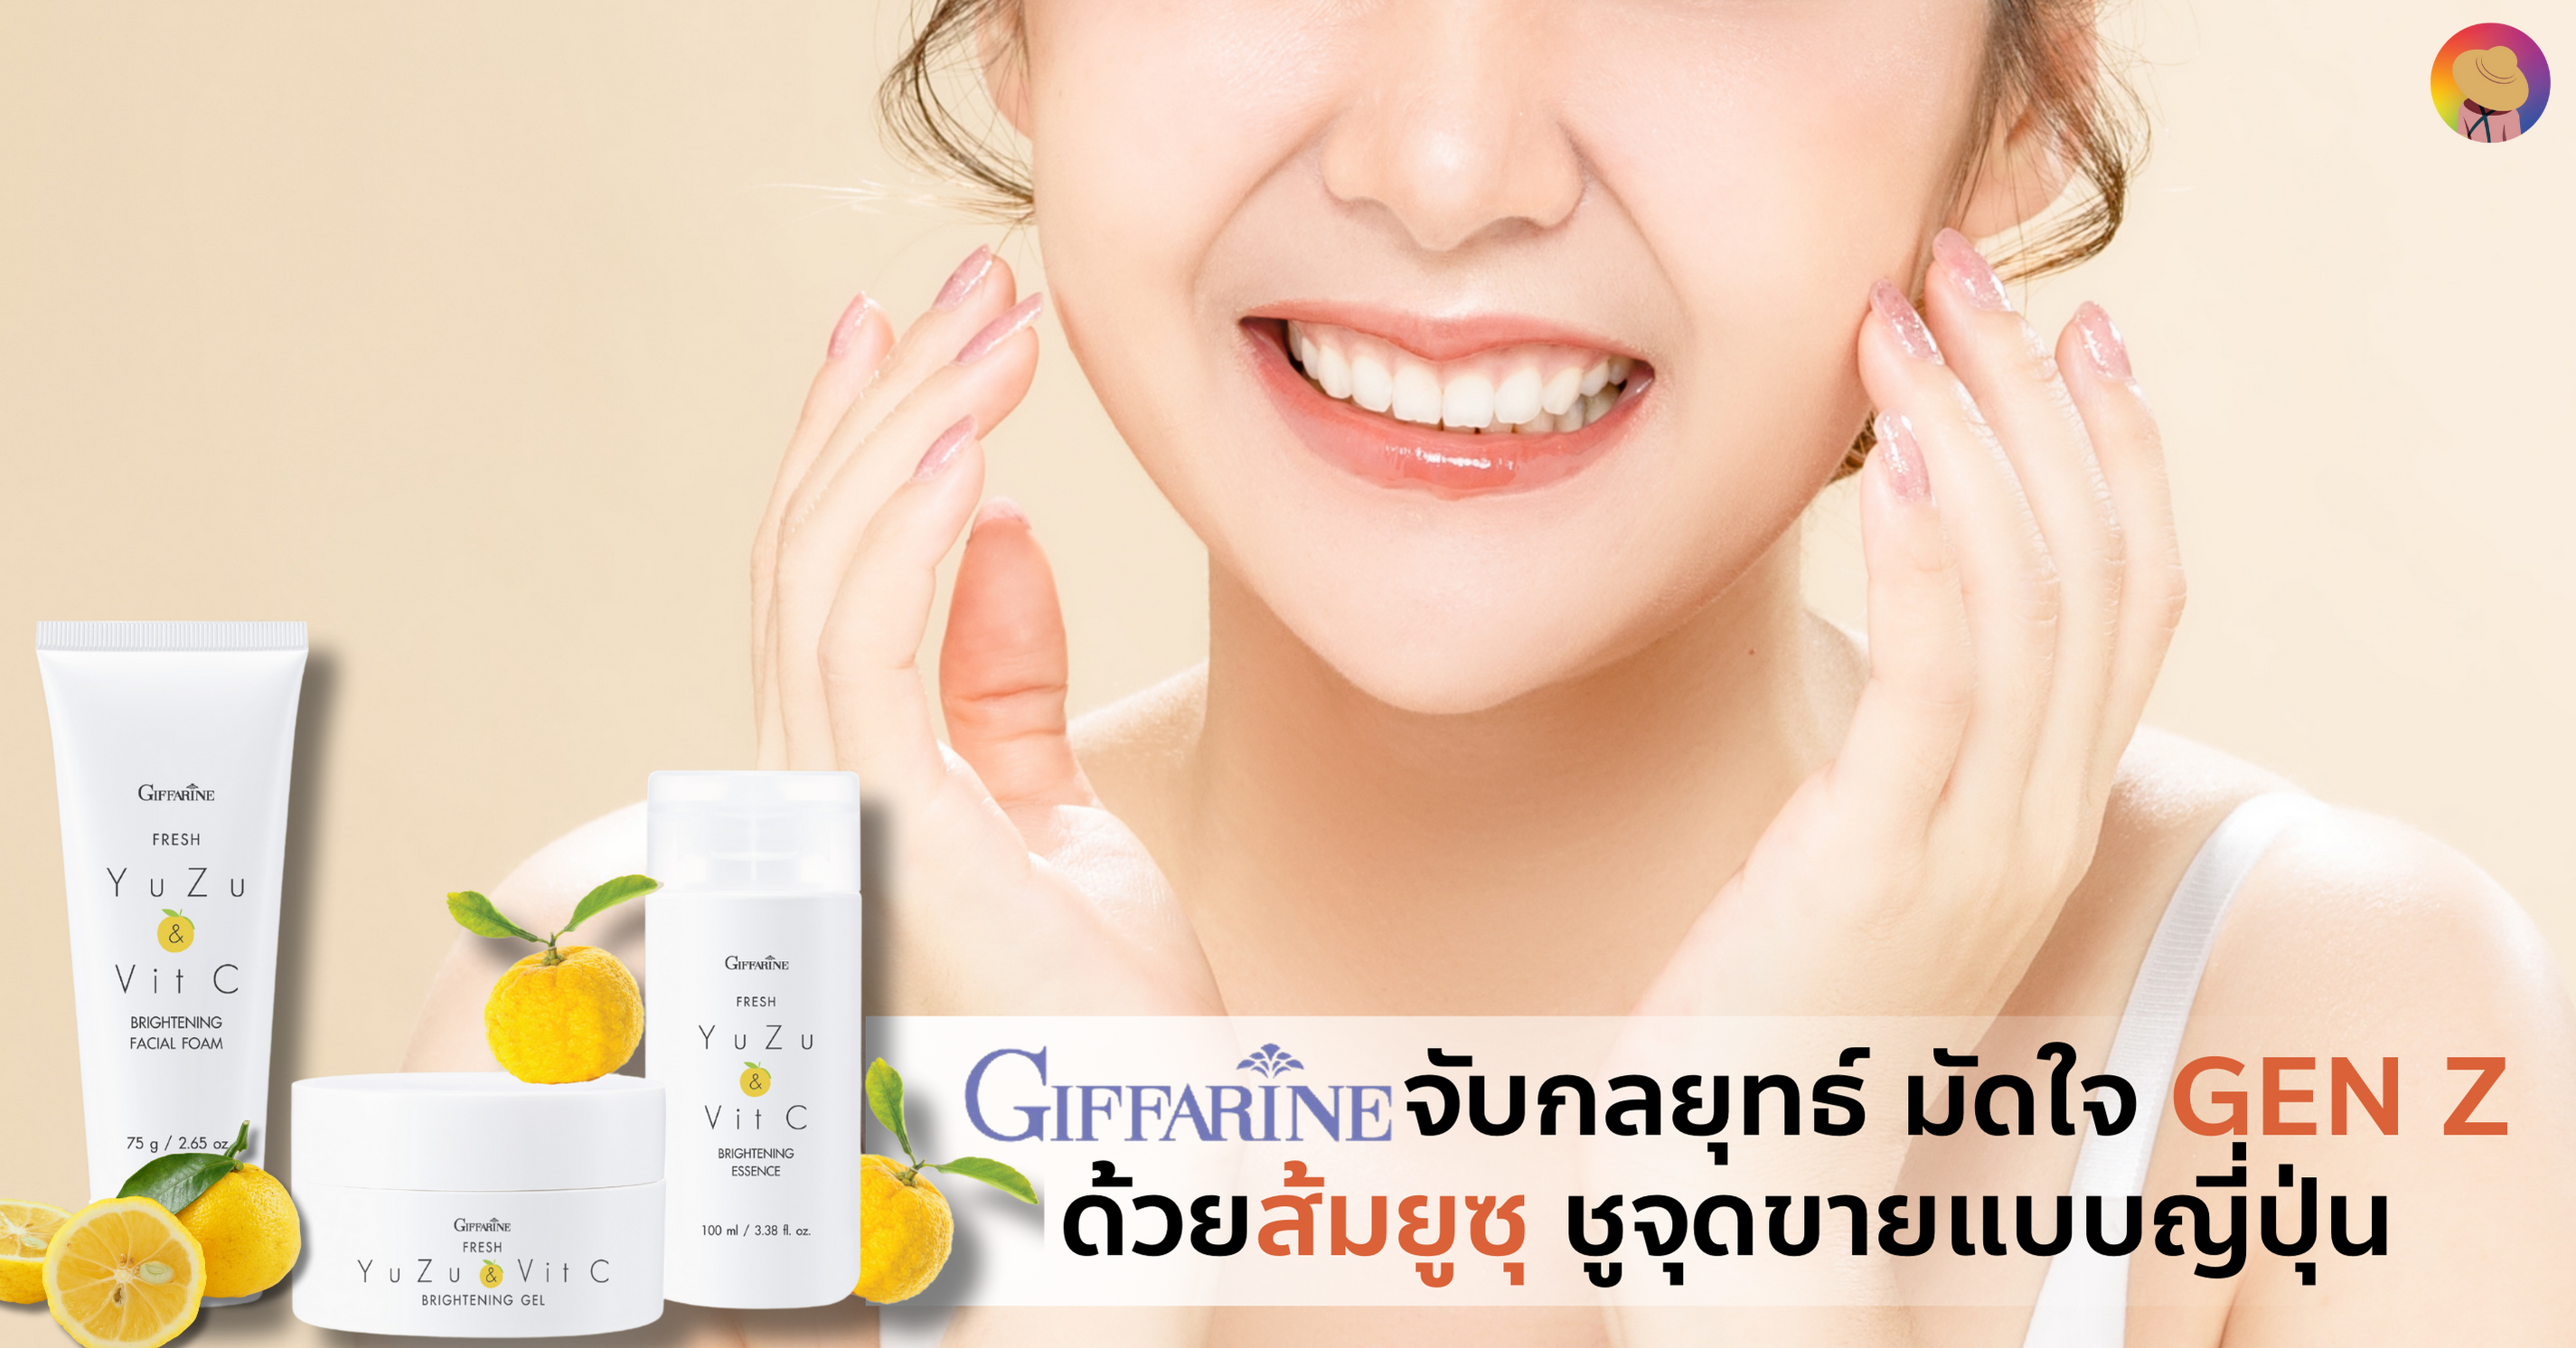 Giffarine จับกลยุทธ์มัดใจ Gen Z ด้วย Skincare ส้มยูซุ ชูจุดขายแบบญี่ปุ่น 